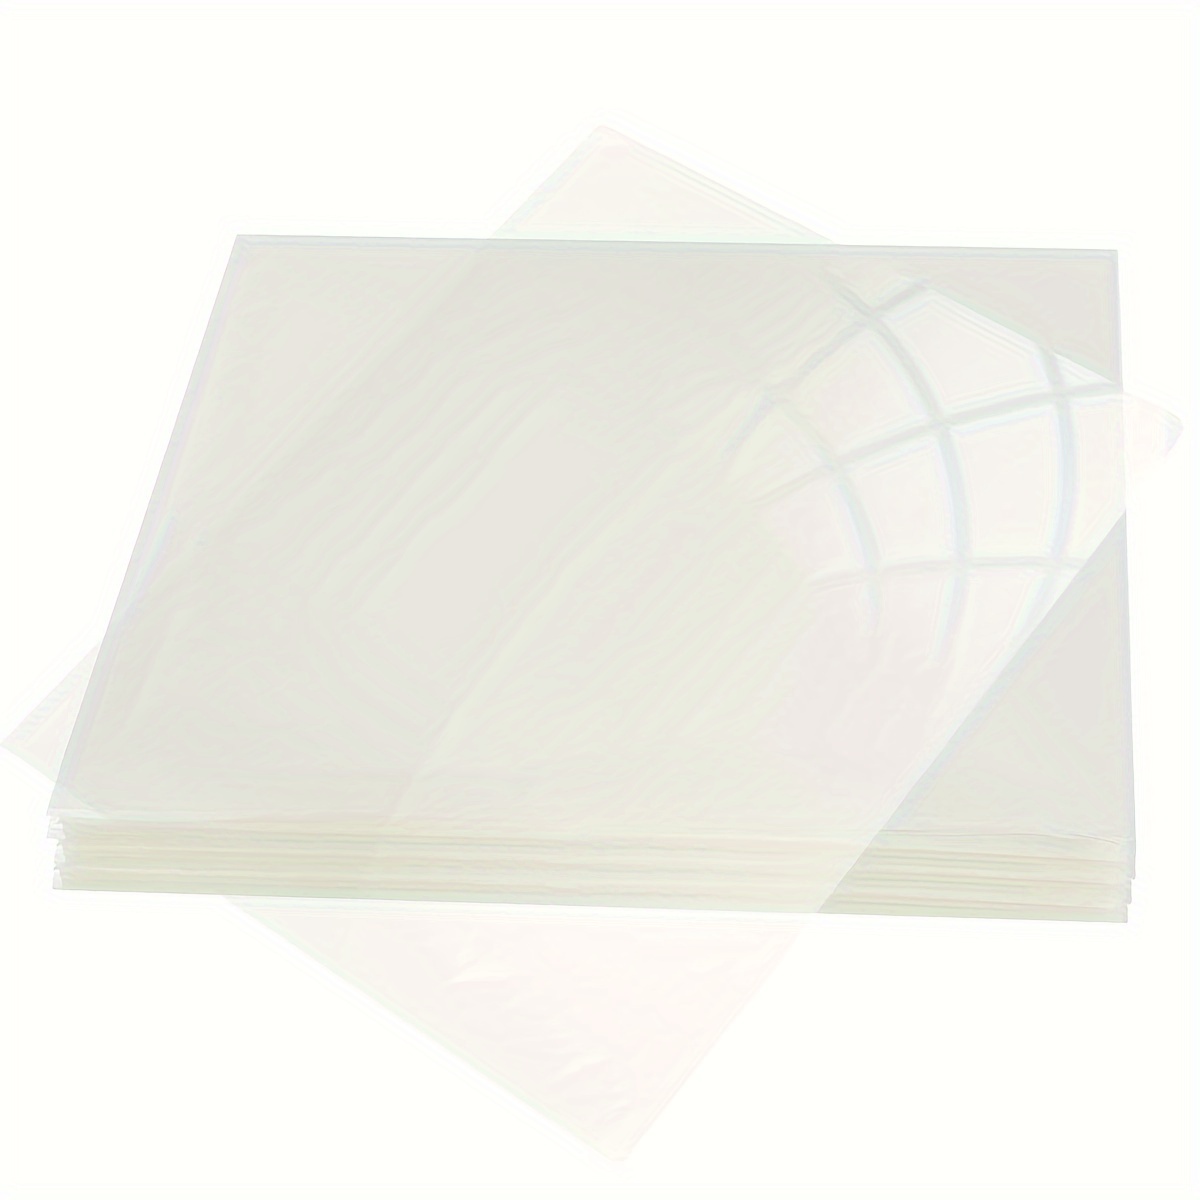 Uinkit 100 Sheets Laser Transparency Film 8.5x11 Color Transparent Paper Ohp Clear Overhead Projector Film 8.5x11 for Laser Jet Printer Copier Copy